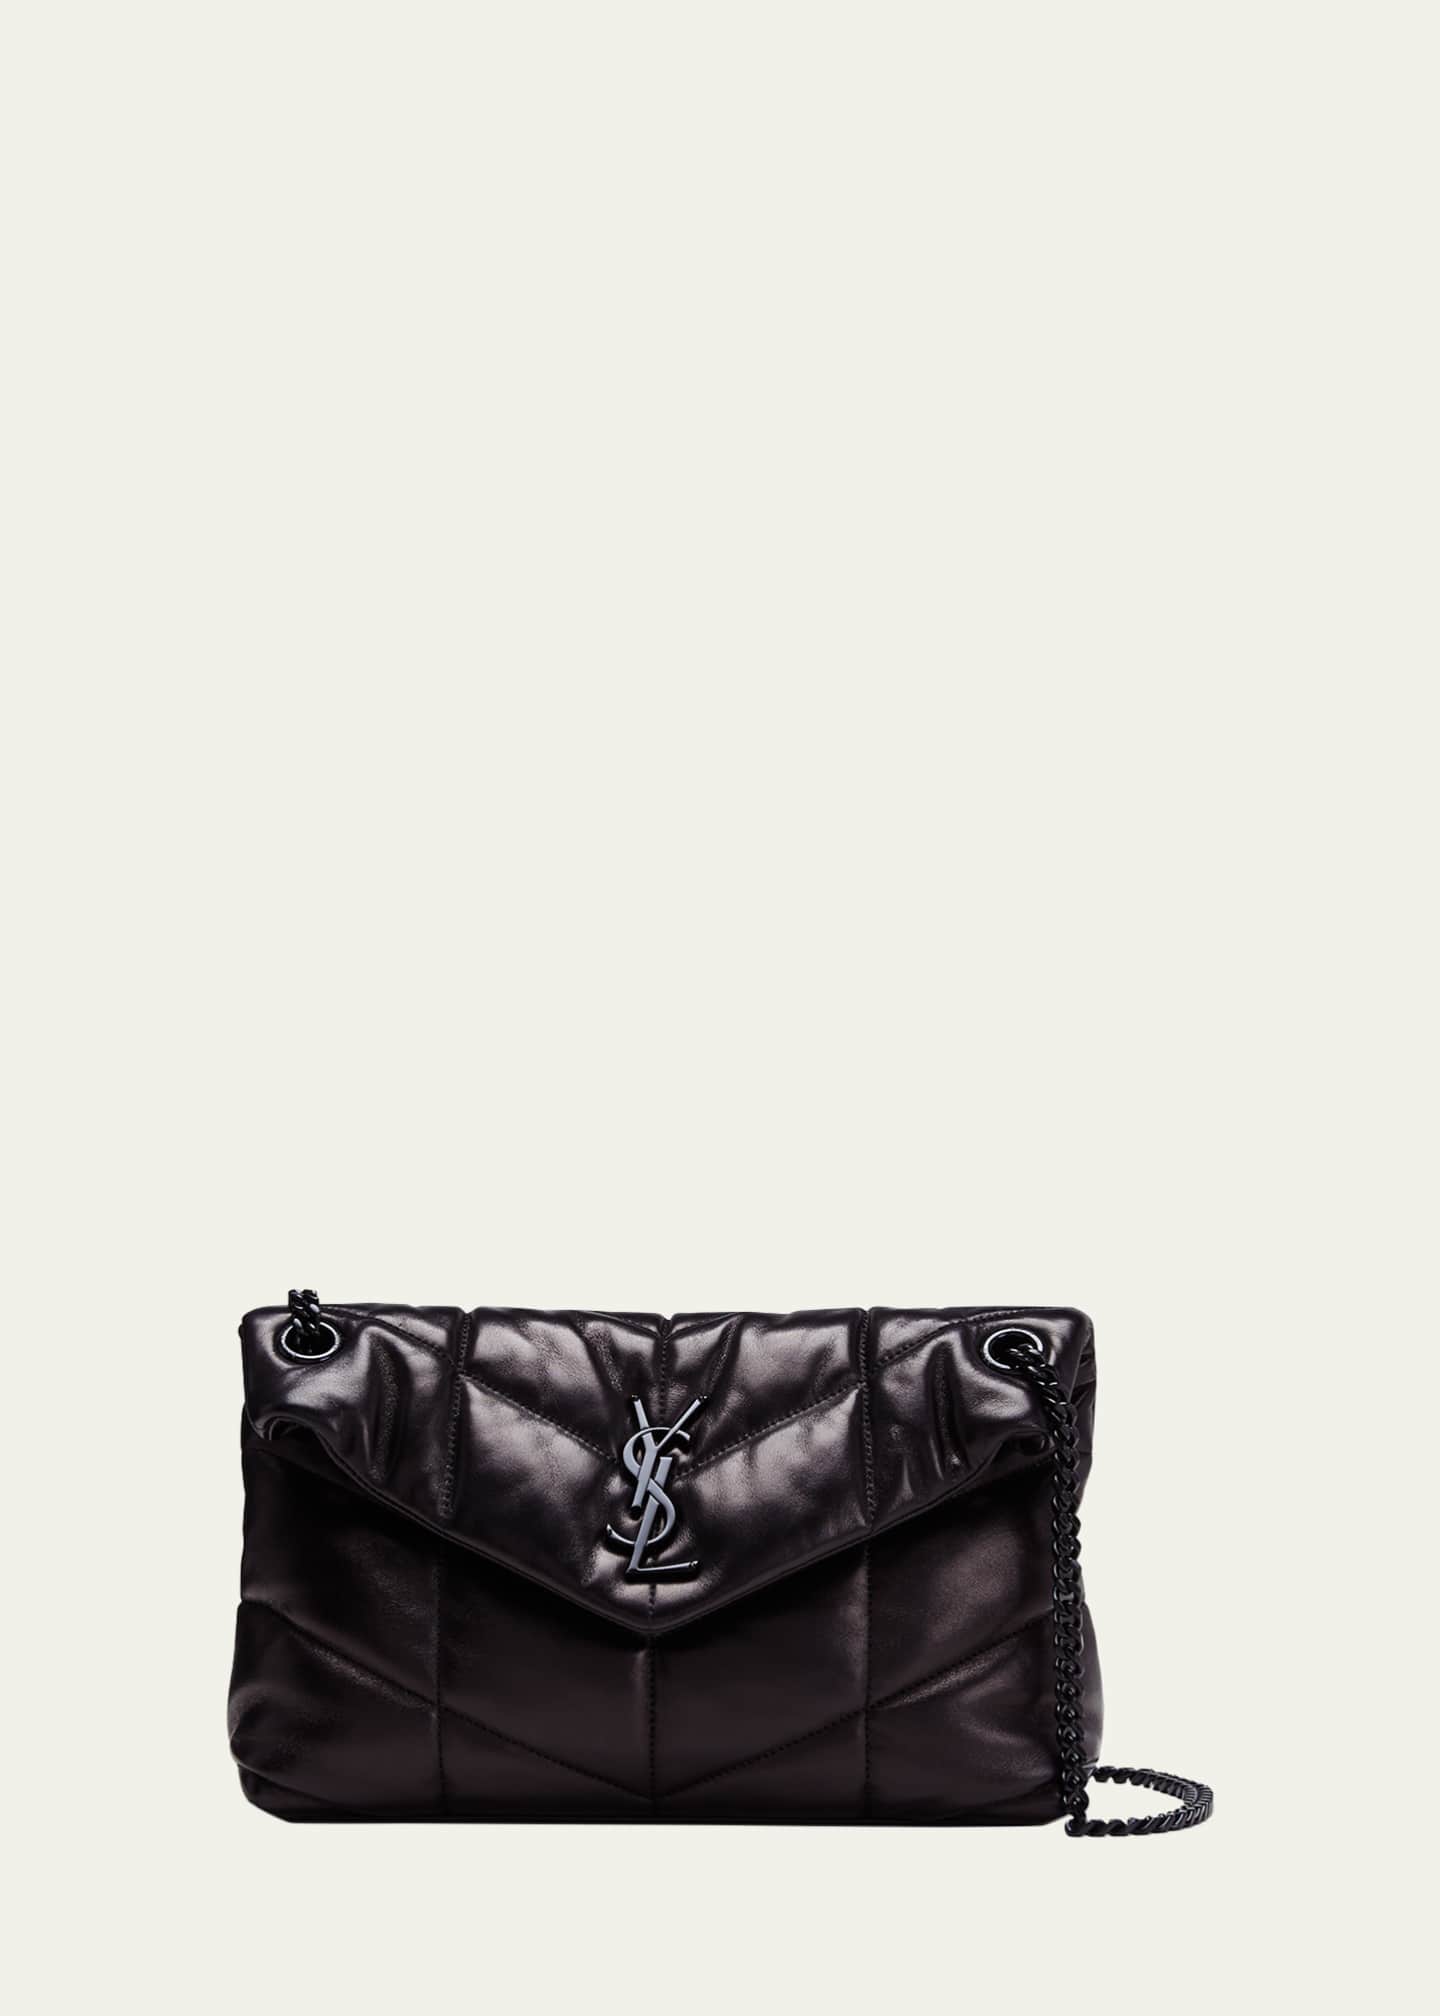 SAINT LAURENT - Loulou leather shoulder bag